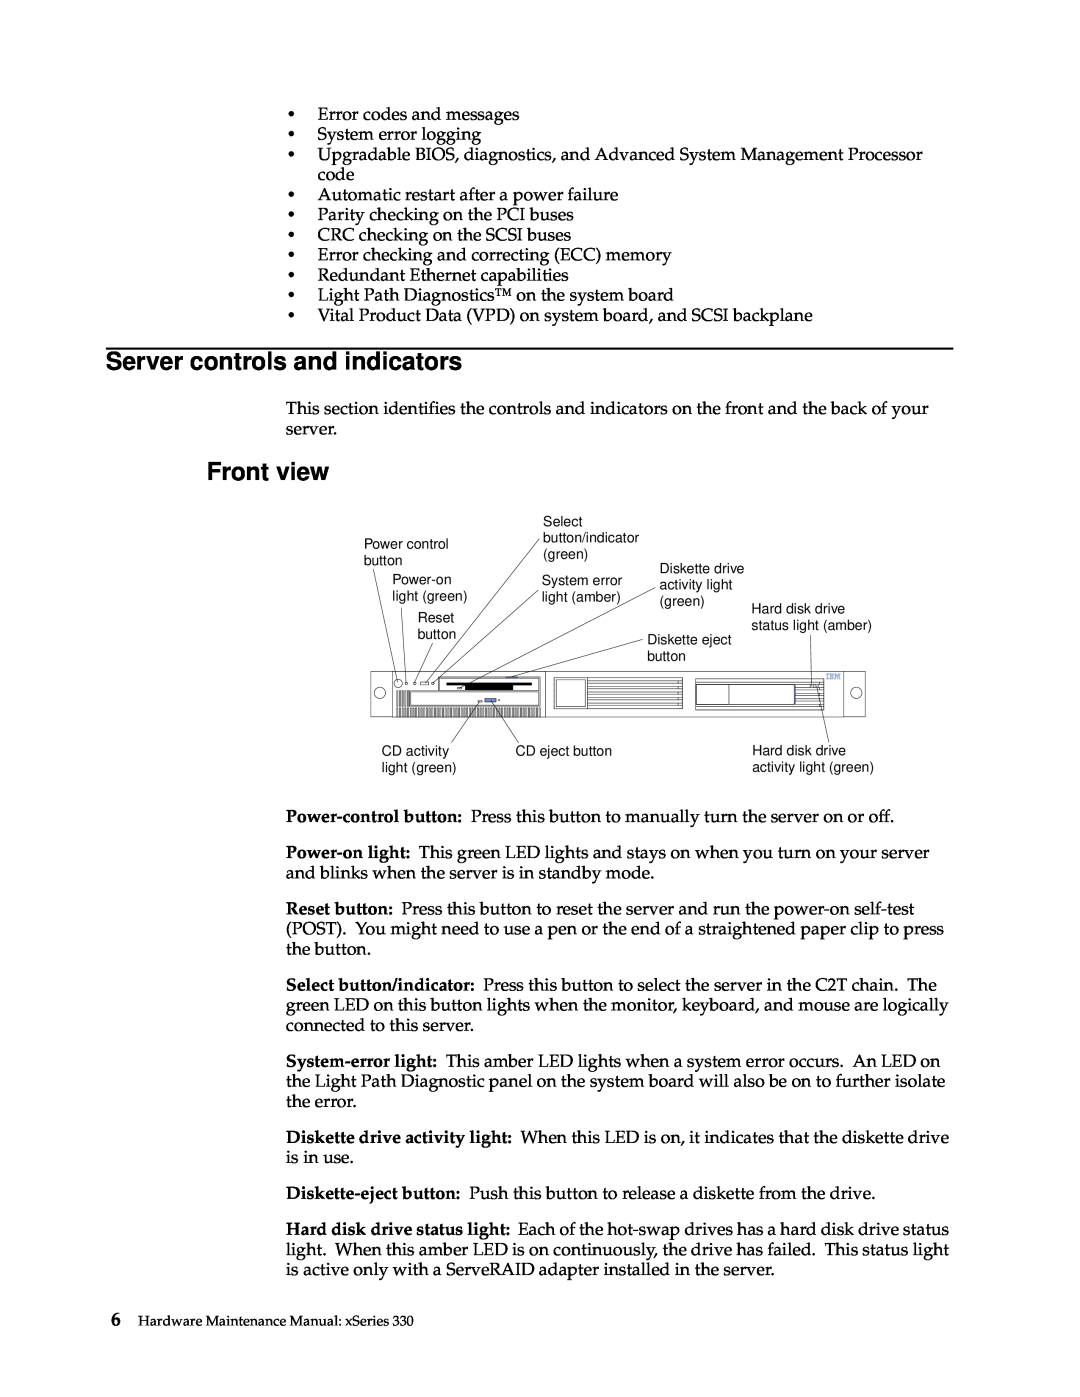 IBM xSeries 330 manual Server controls and indicators, Front view 